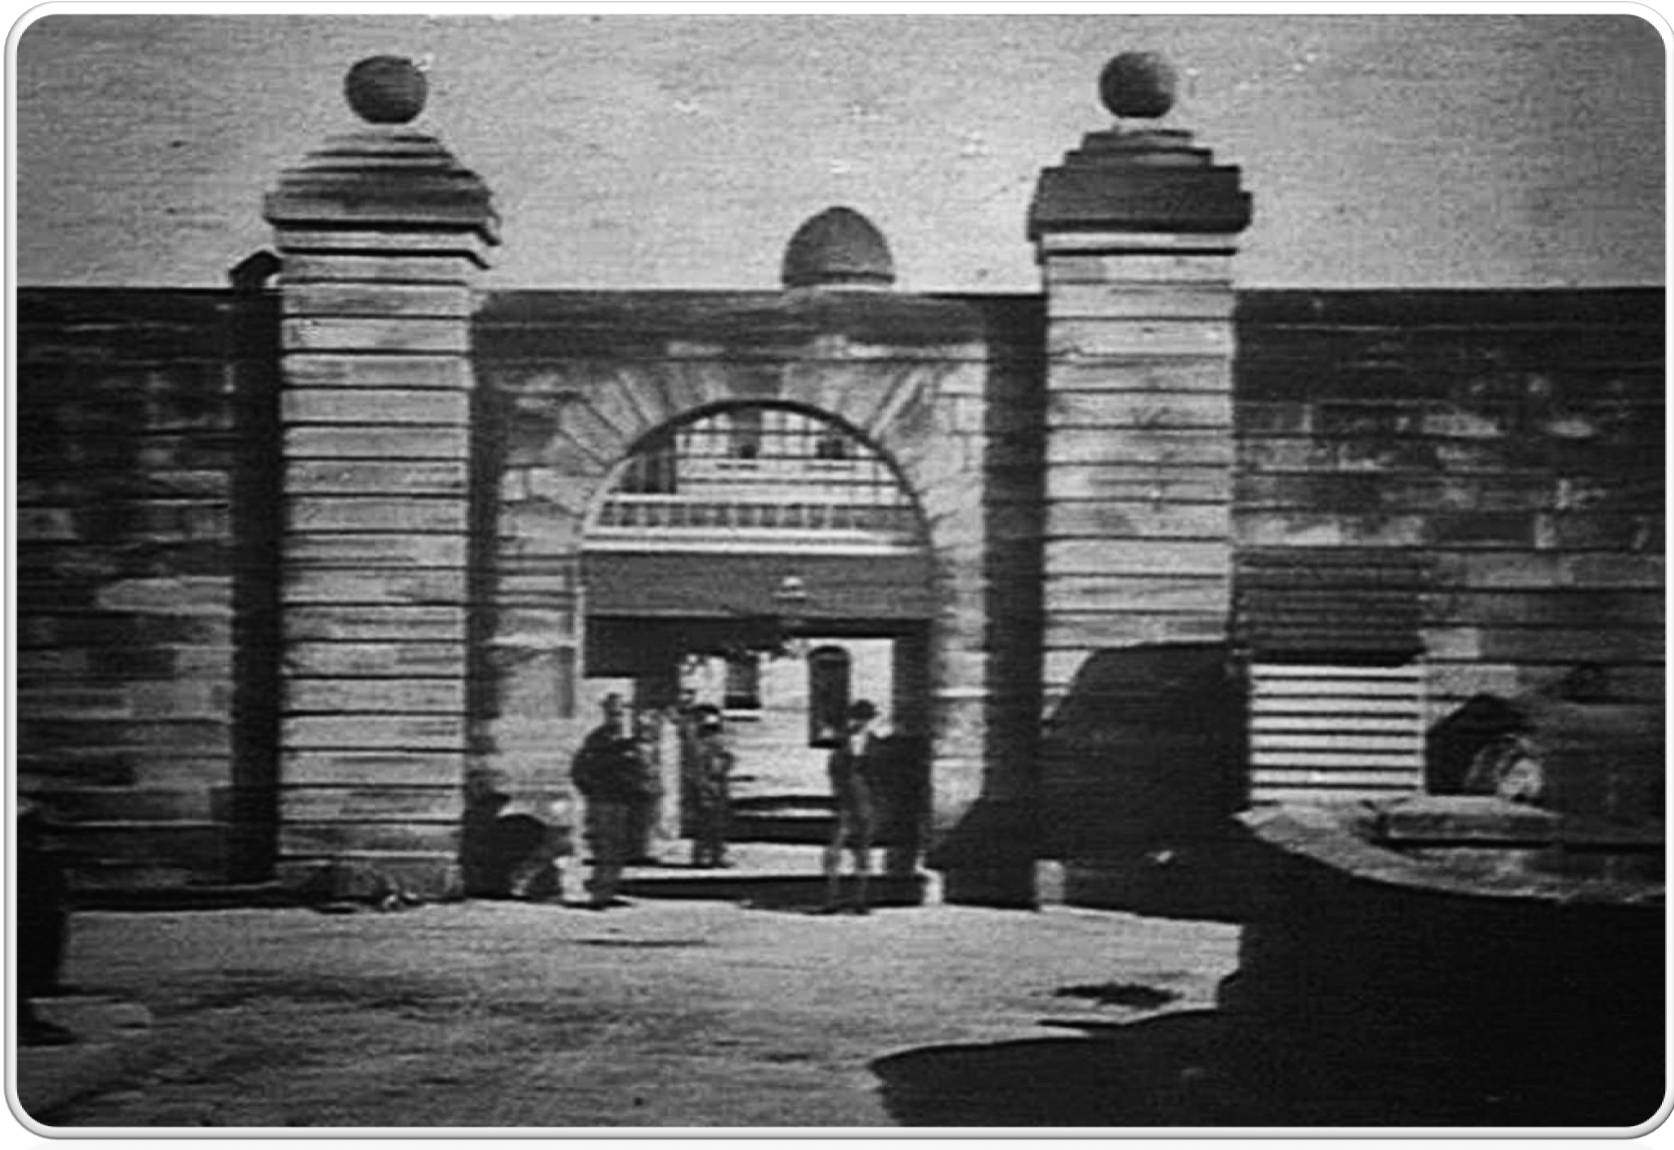 Entrance to Female Factory, Parramatta, showing stone bridge